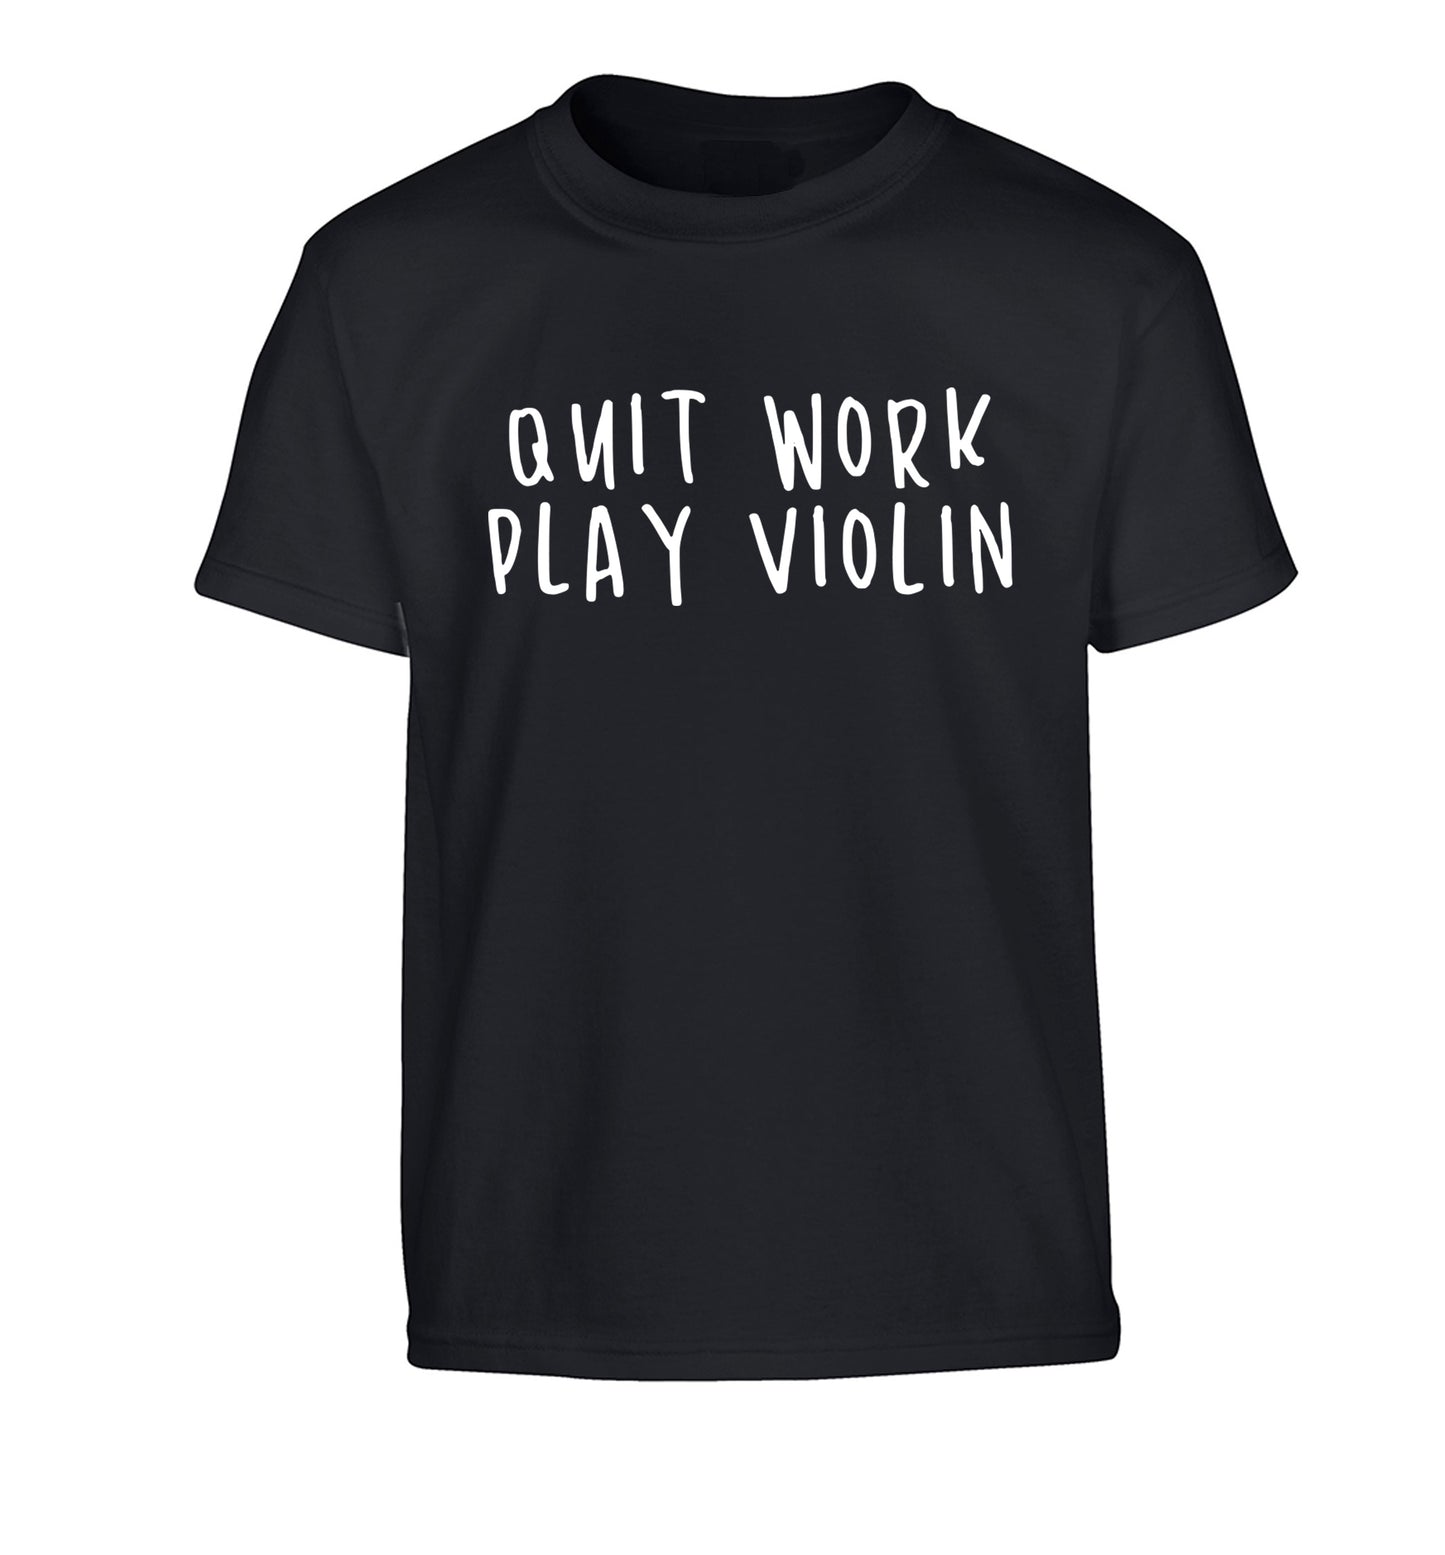 Quit work play violin Children's black Tshirt 12-13 Years